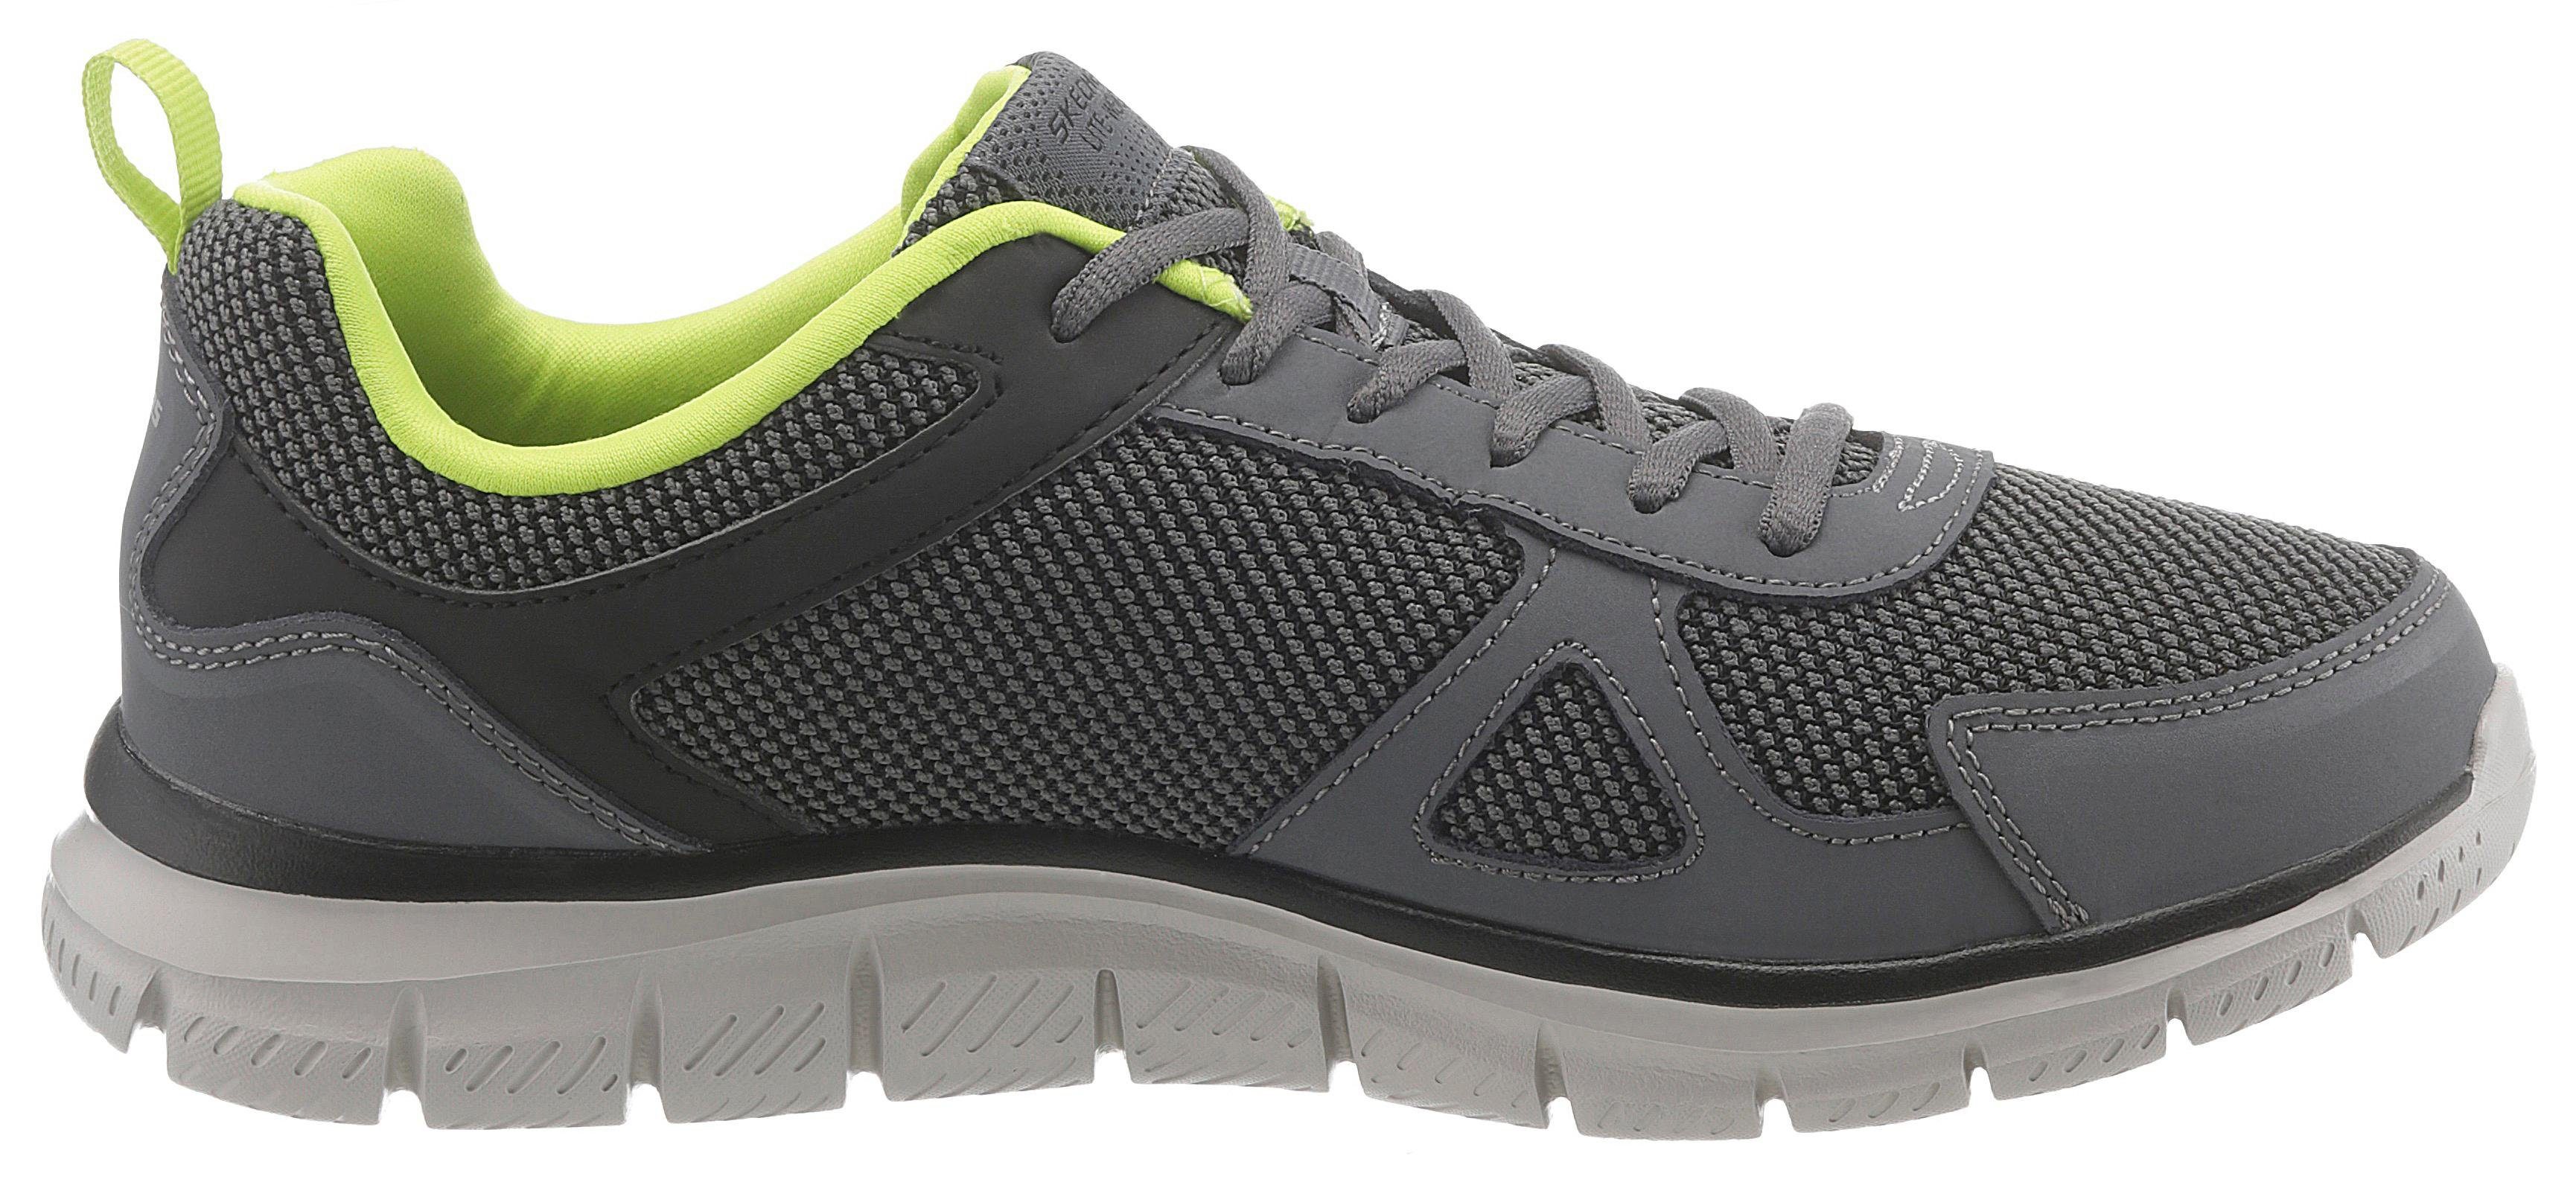 Skechers Charcoal-Black-Lime mit - Logo Sneaker Grau-Schwarz-Grün CCLM seitlichem / Track